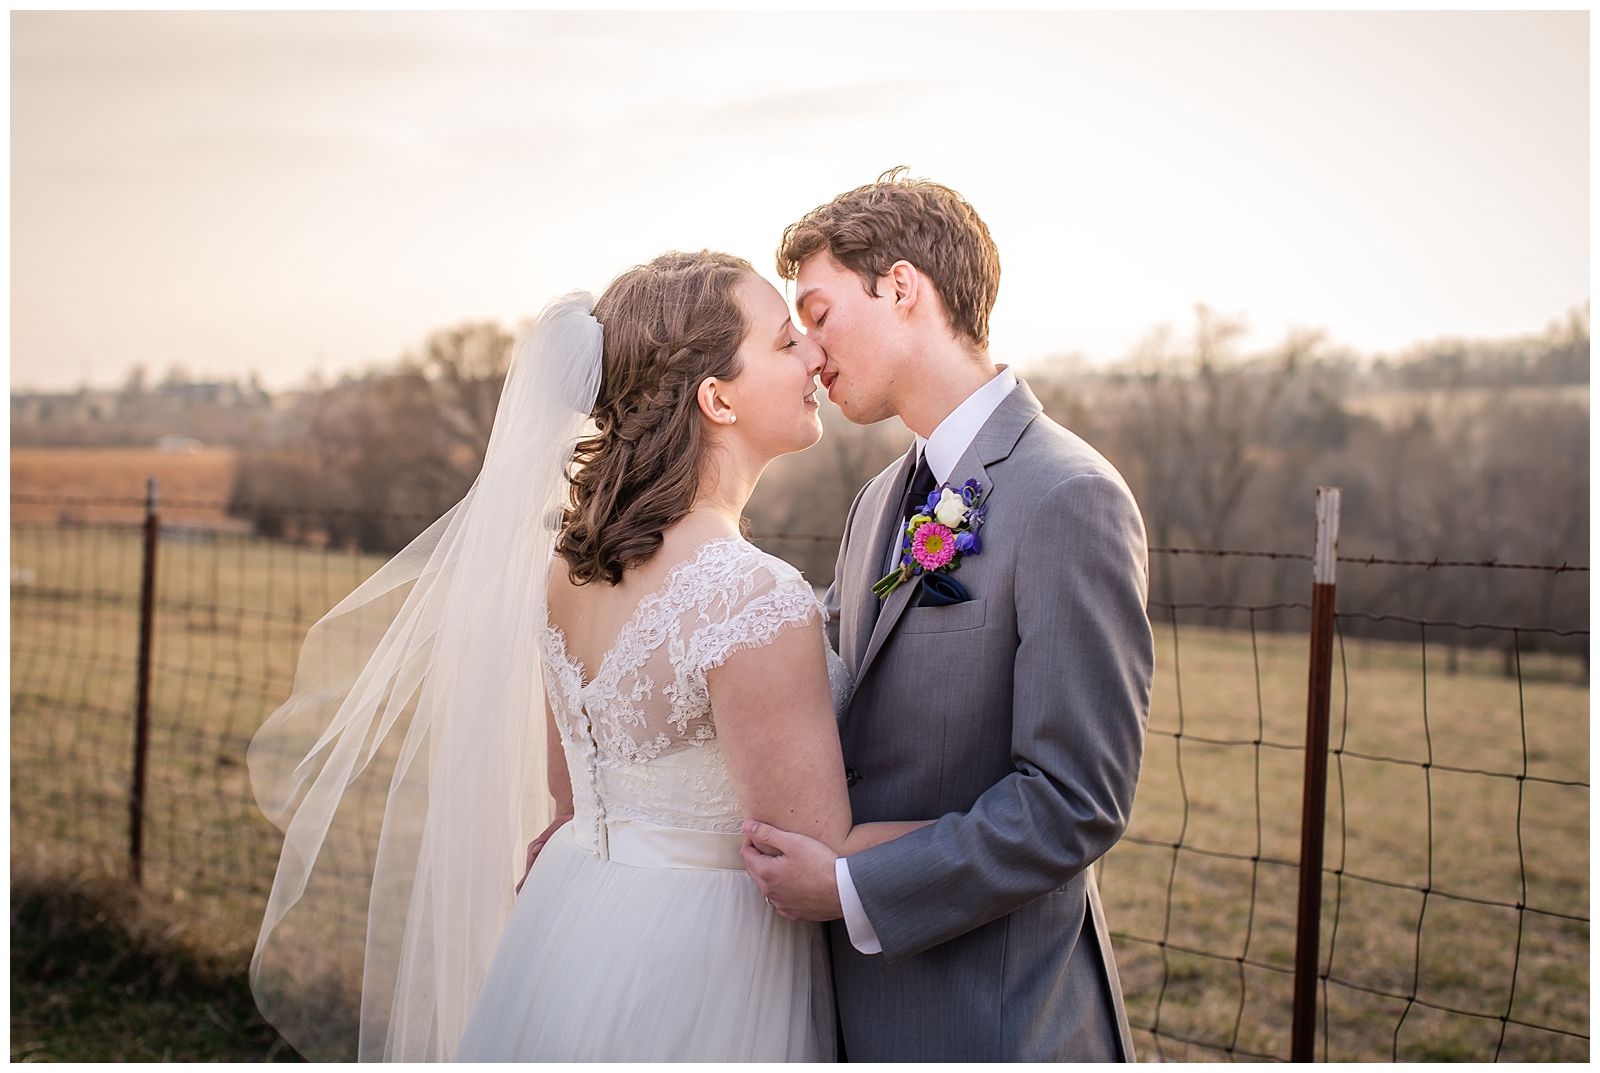 Wedding photography at The Barn at Kill Creek Farm in De Soto, Kansas, by Kansas City wedding photographers Wisdom-Watson Weddings.